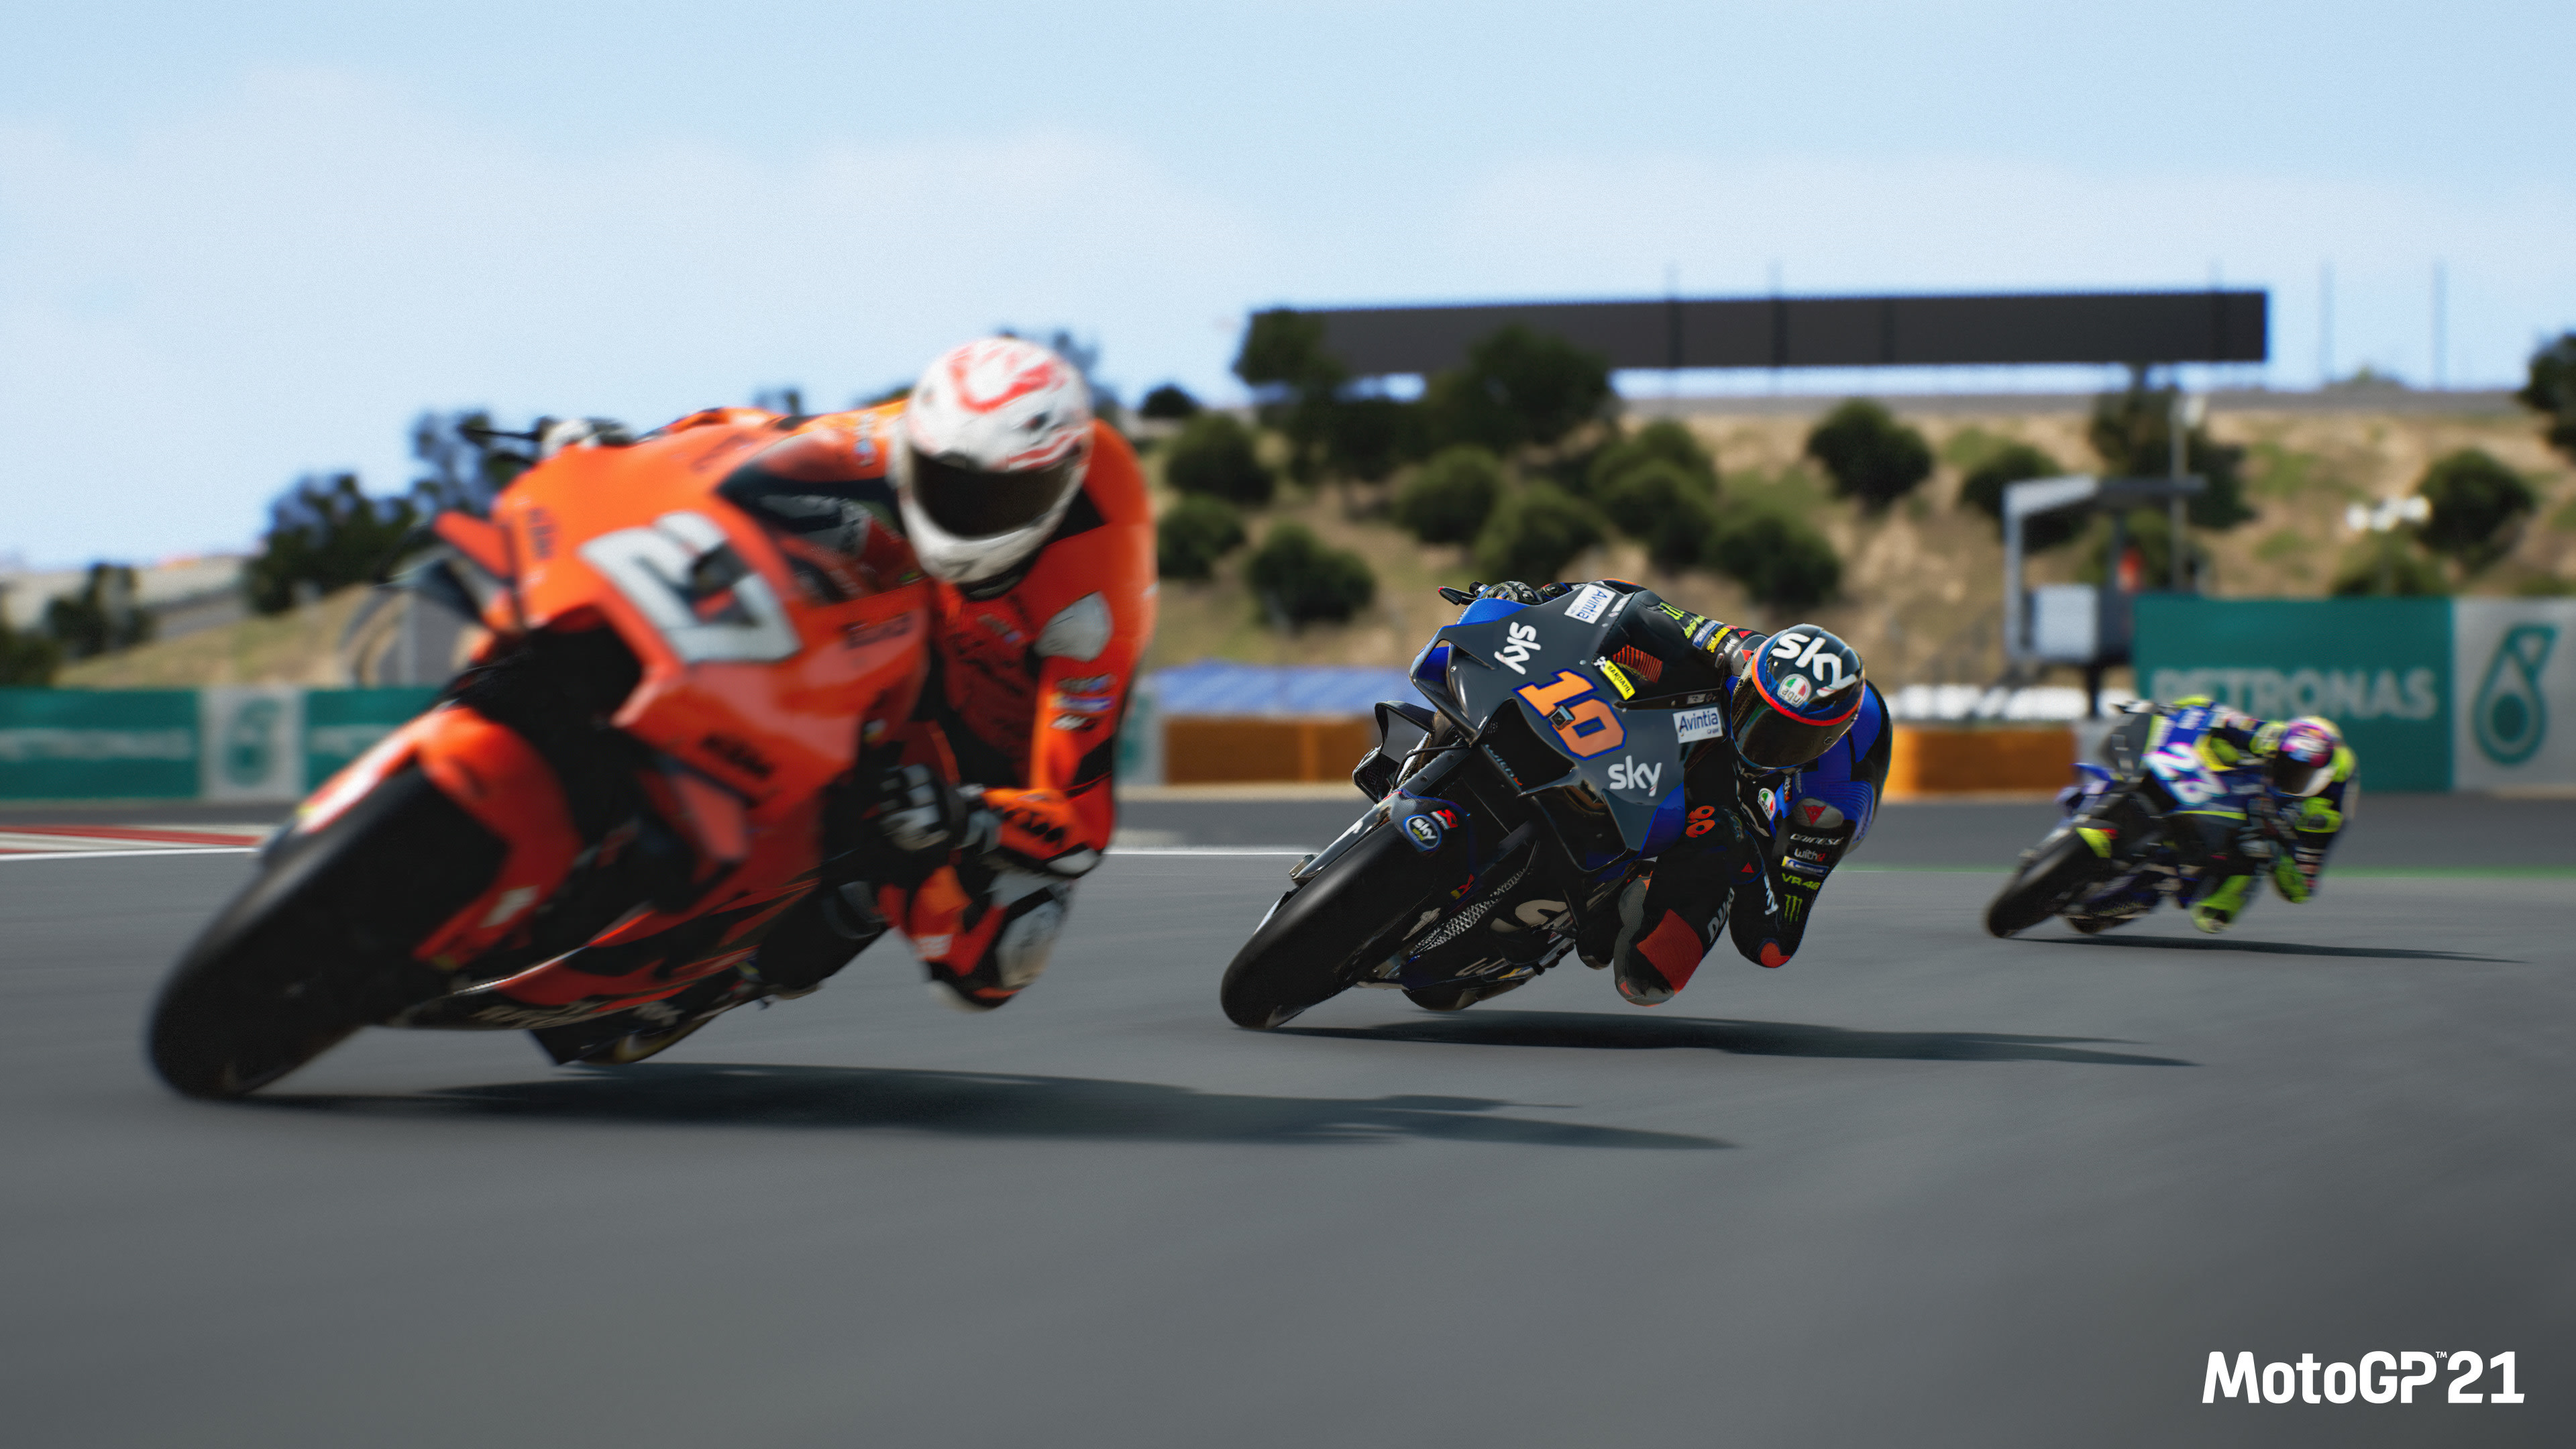 Video Game MotoGP 21 3840x2160